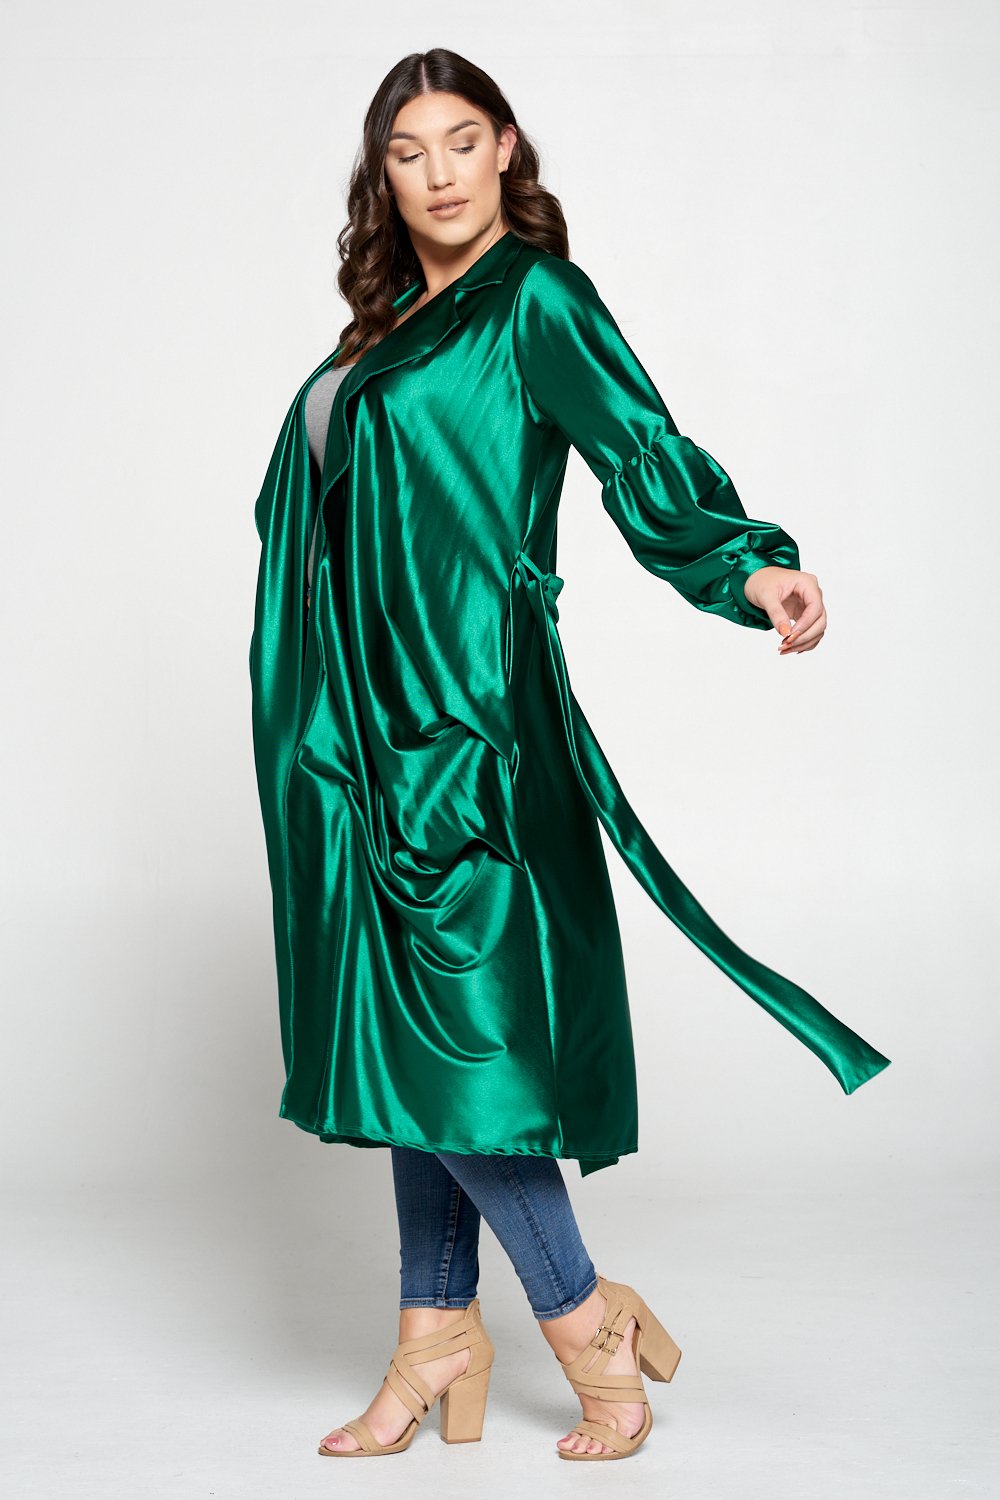 livd L I V D women's contemporary plus size fashion tie coat in shiny stretch satin in gucci green emerald